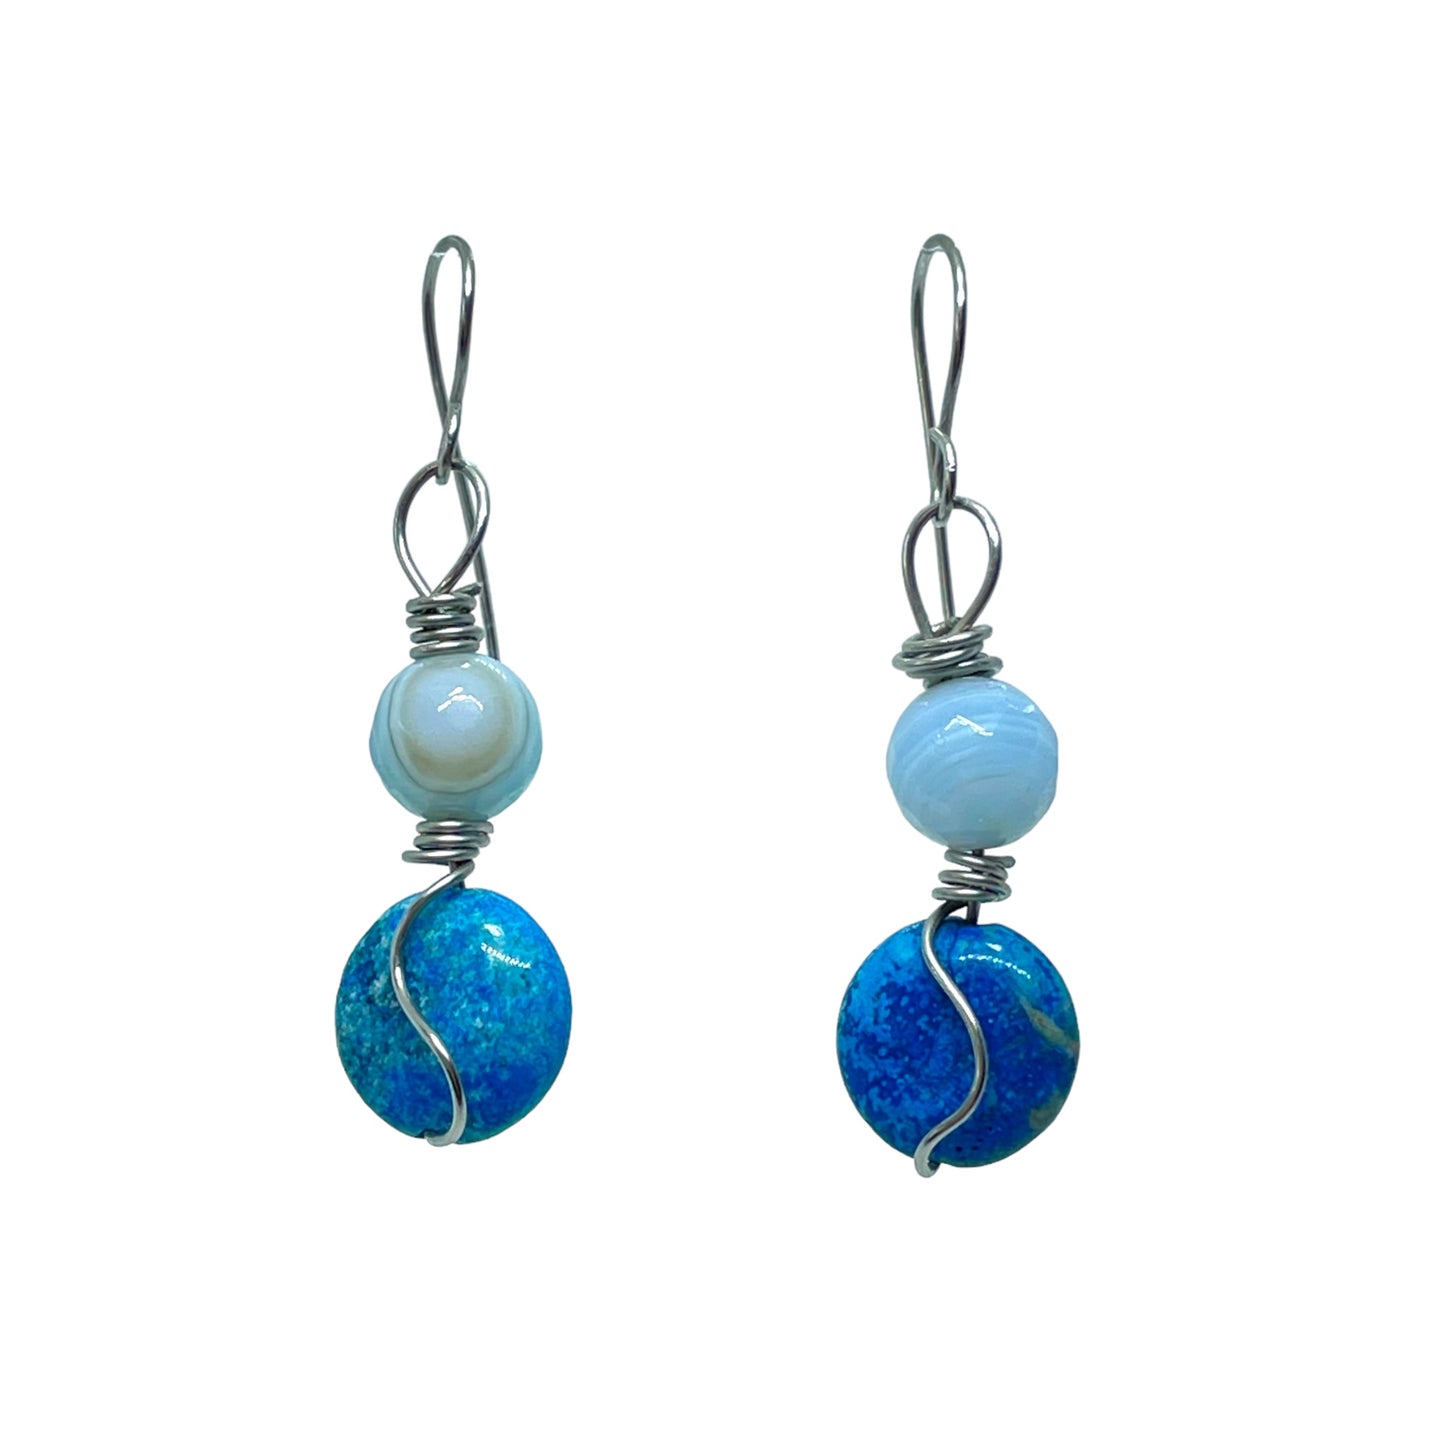 Blue agate and howlite gemstone earrings. Wire-wrapped in stainless steel. Handmade drop earrings.